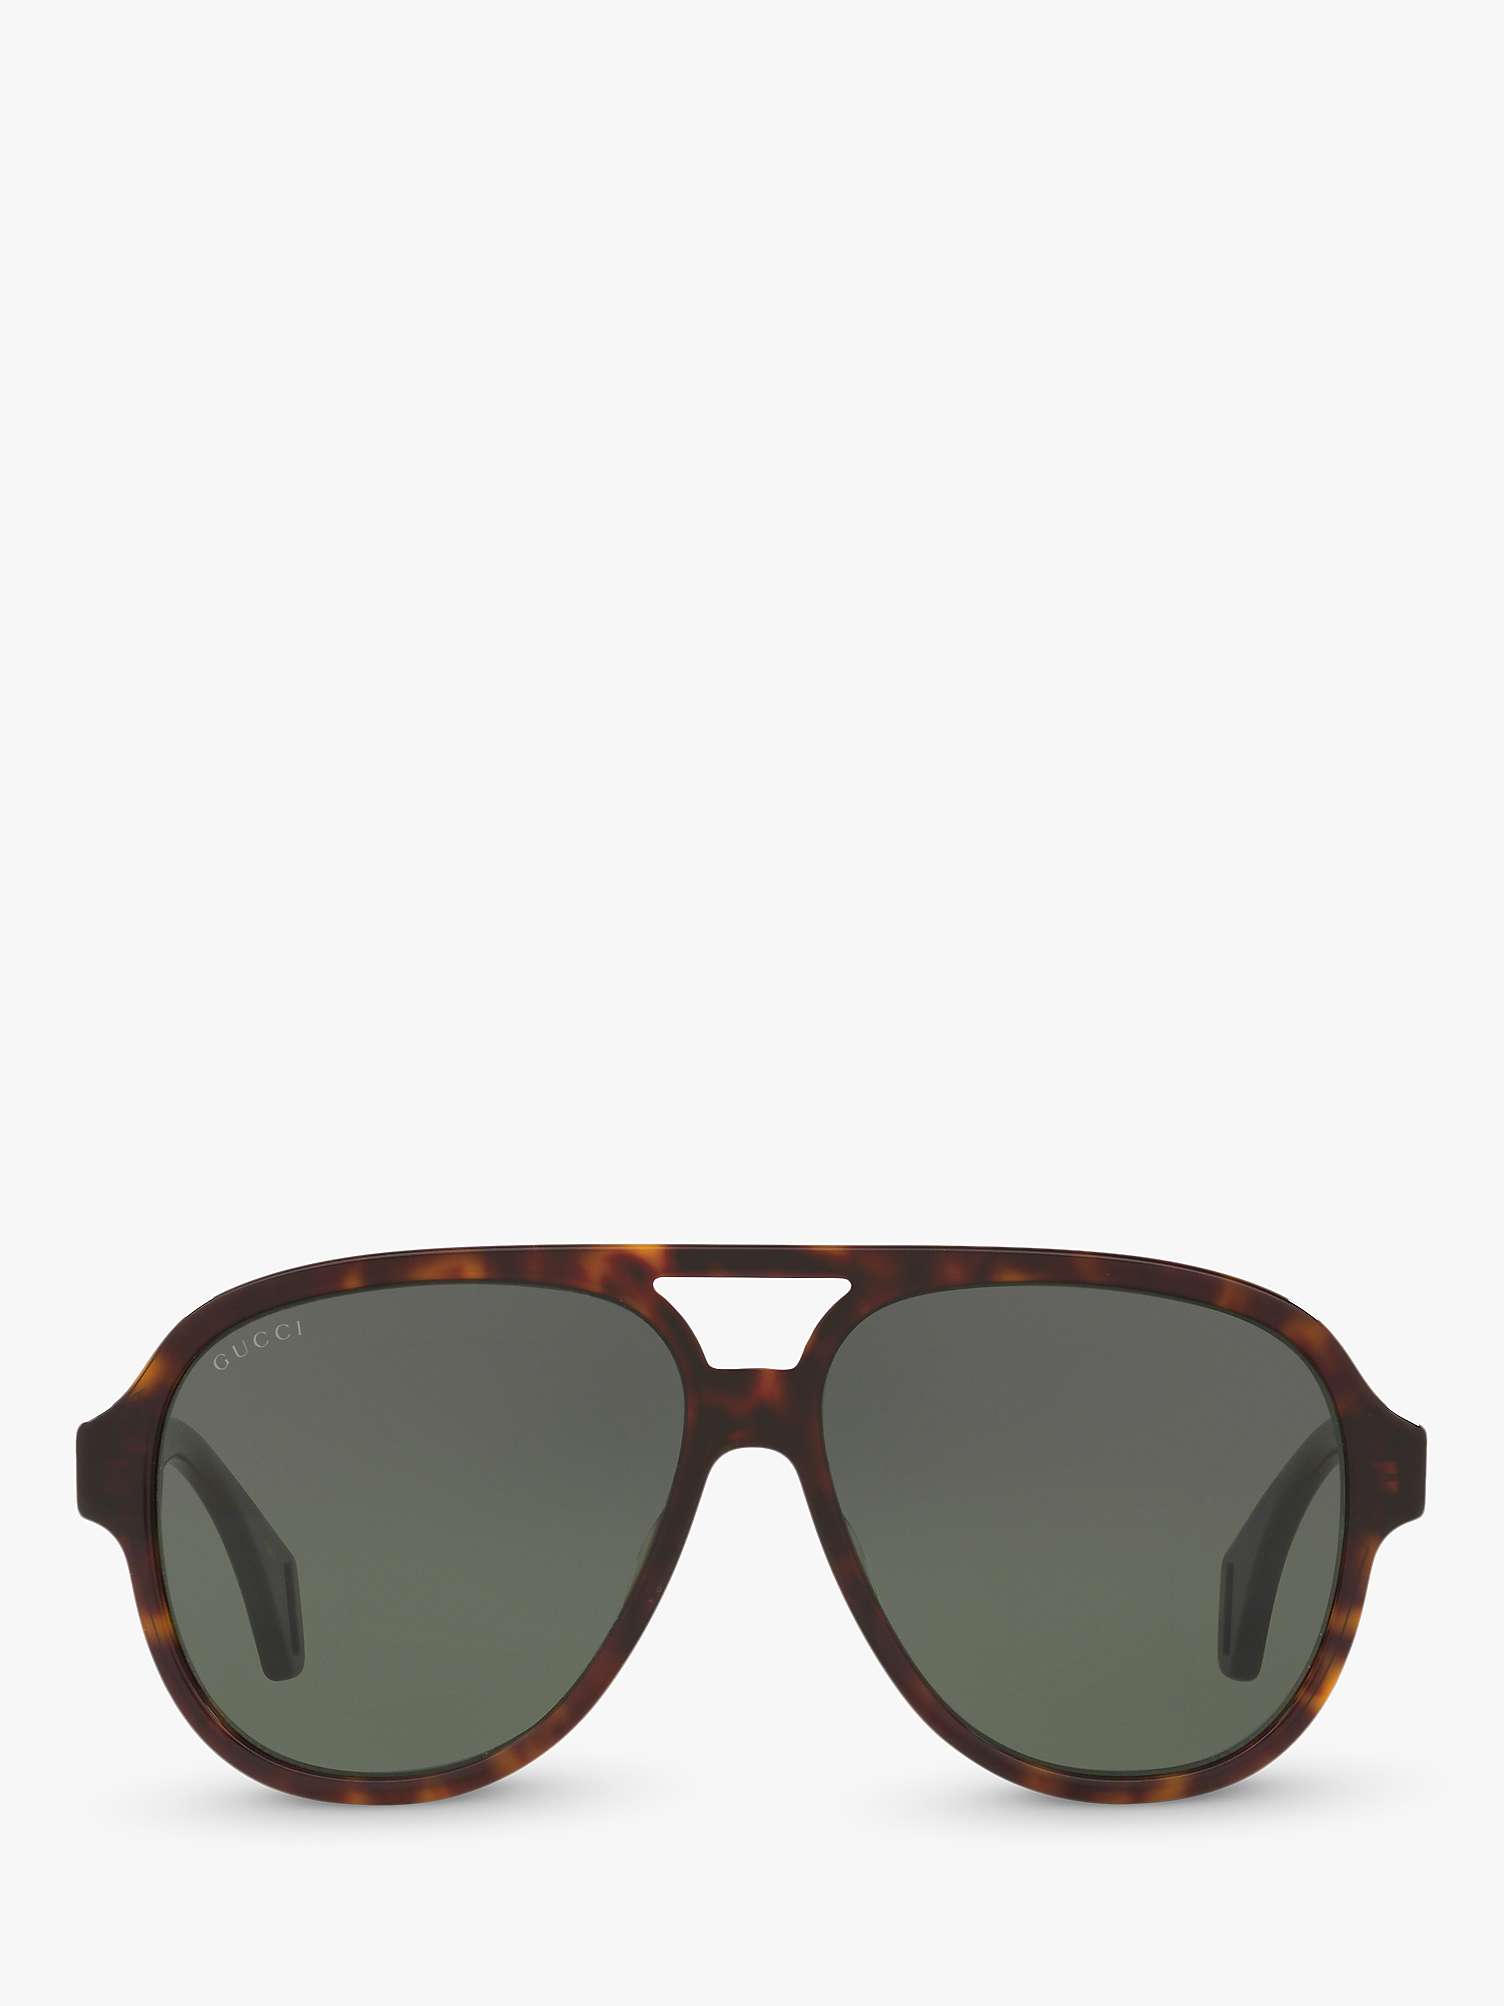 Buy Gucci GG0463S Men's Aviator Sunglasses Online at johnlewis.com